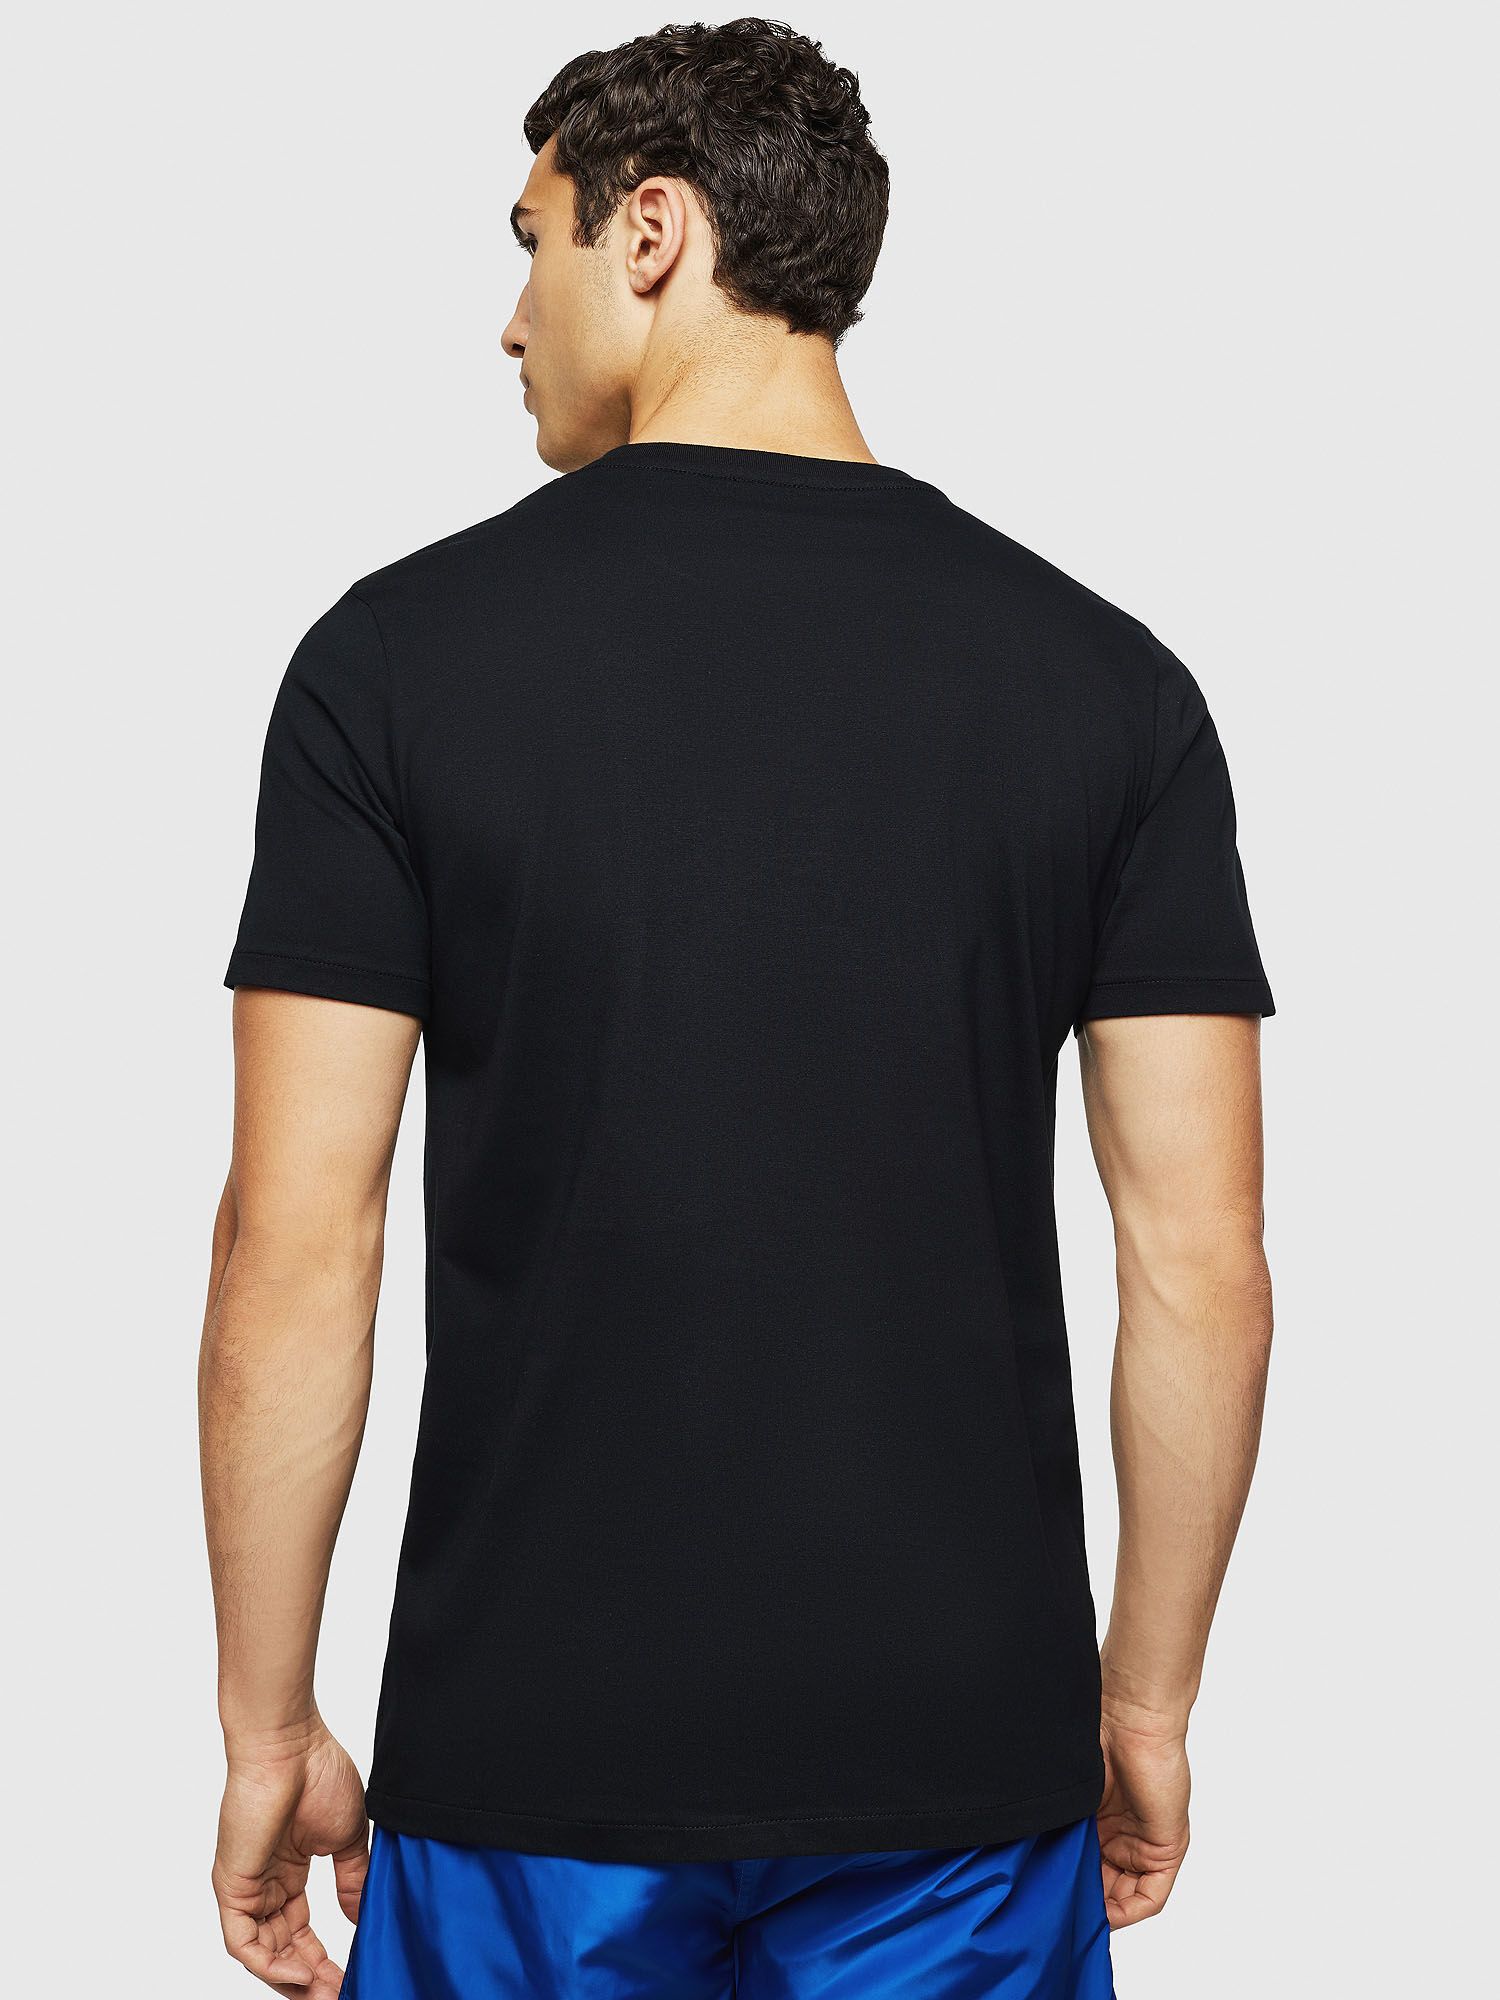 Camiseta BMOWT-PARSEN Negra - ECRU